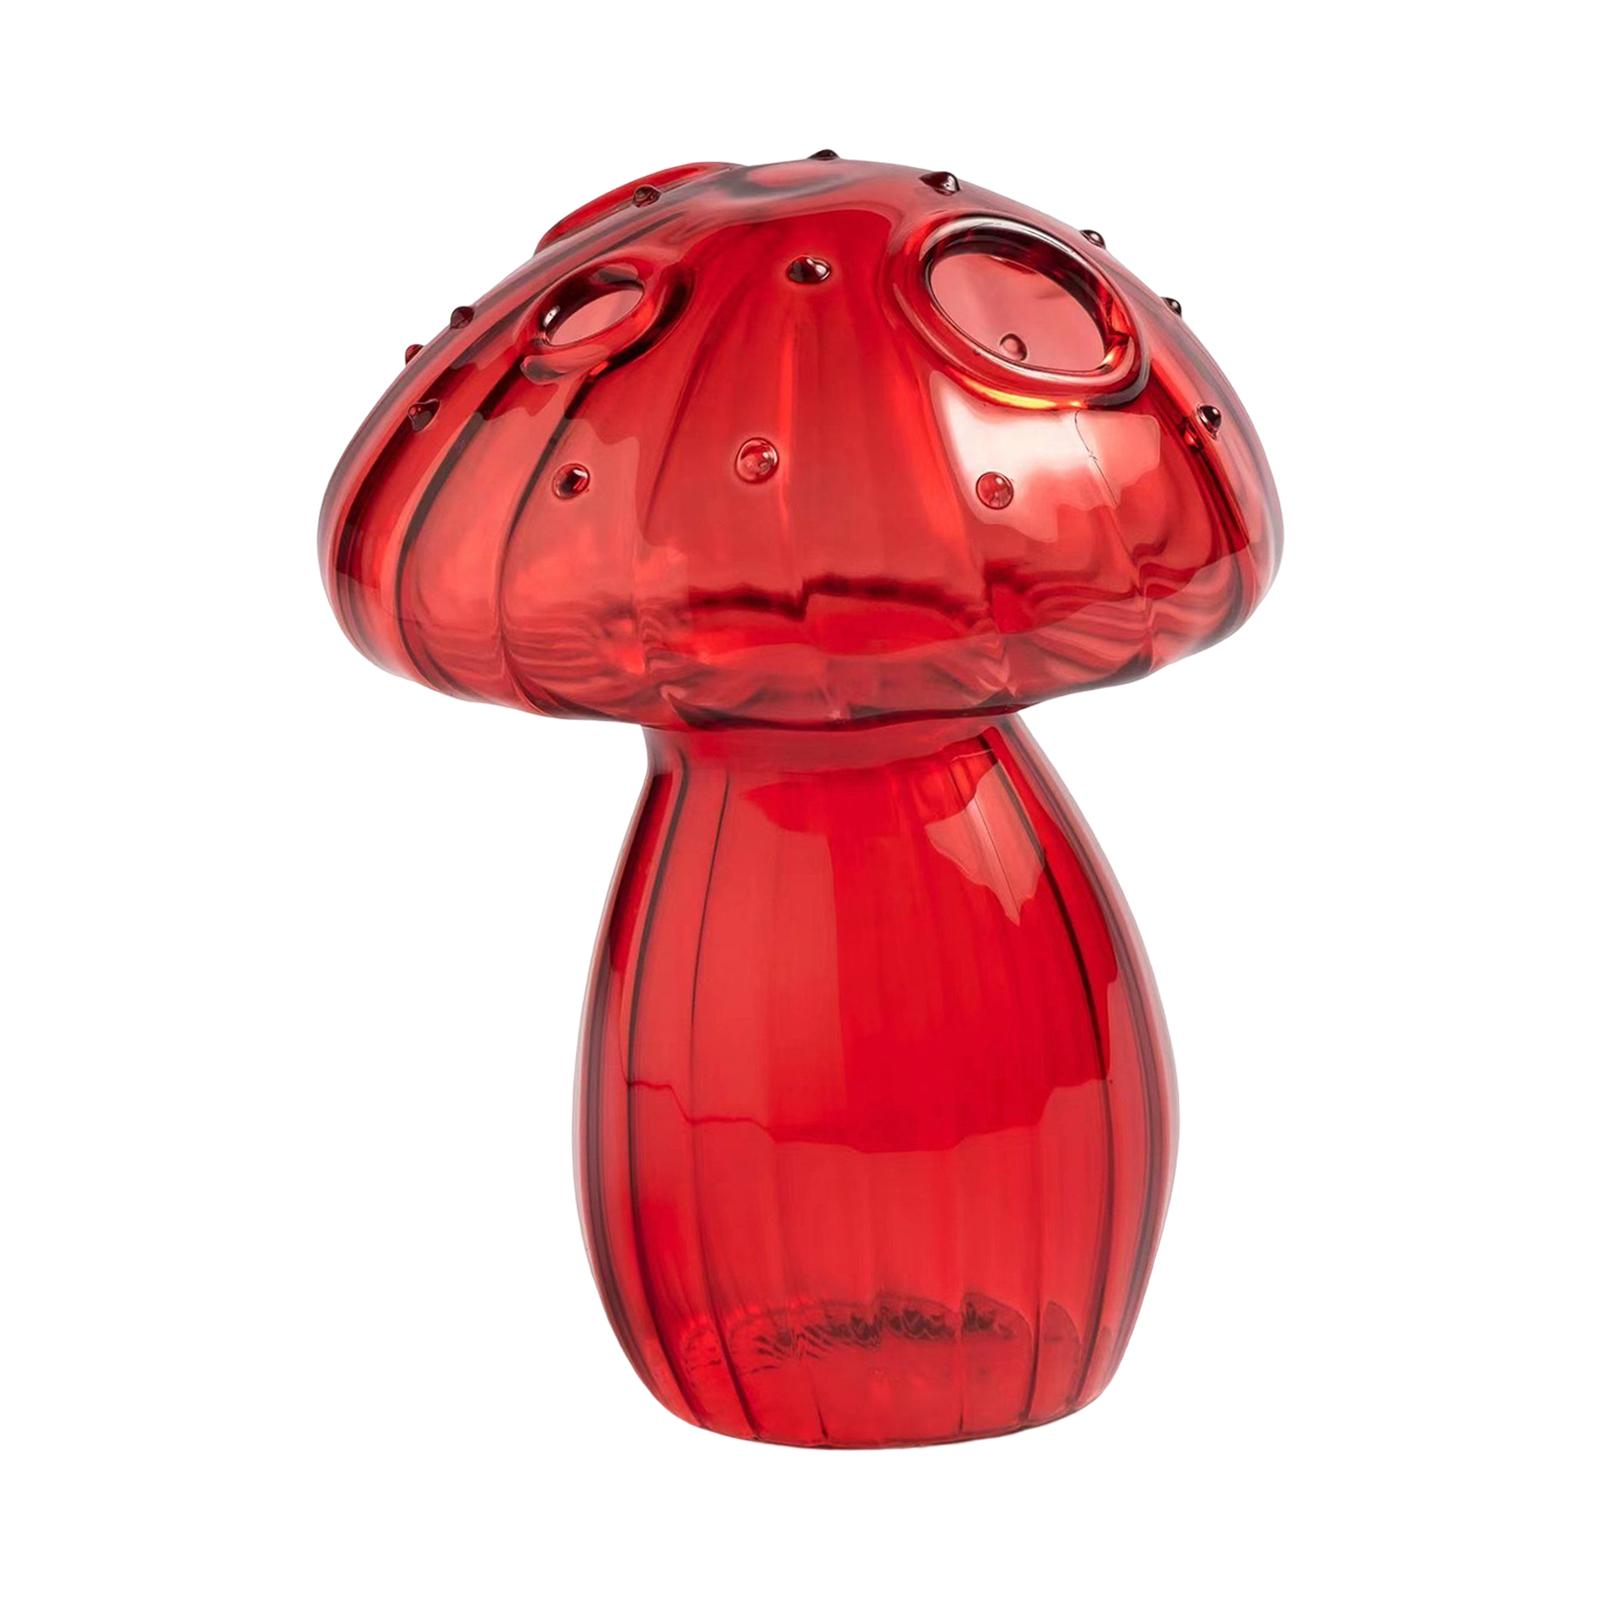 Creative Flower Vase Decorative Vases Mushroom Shaped Glass Vase Home Decor Red